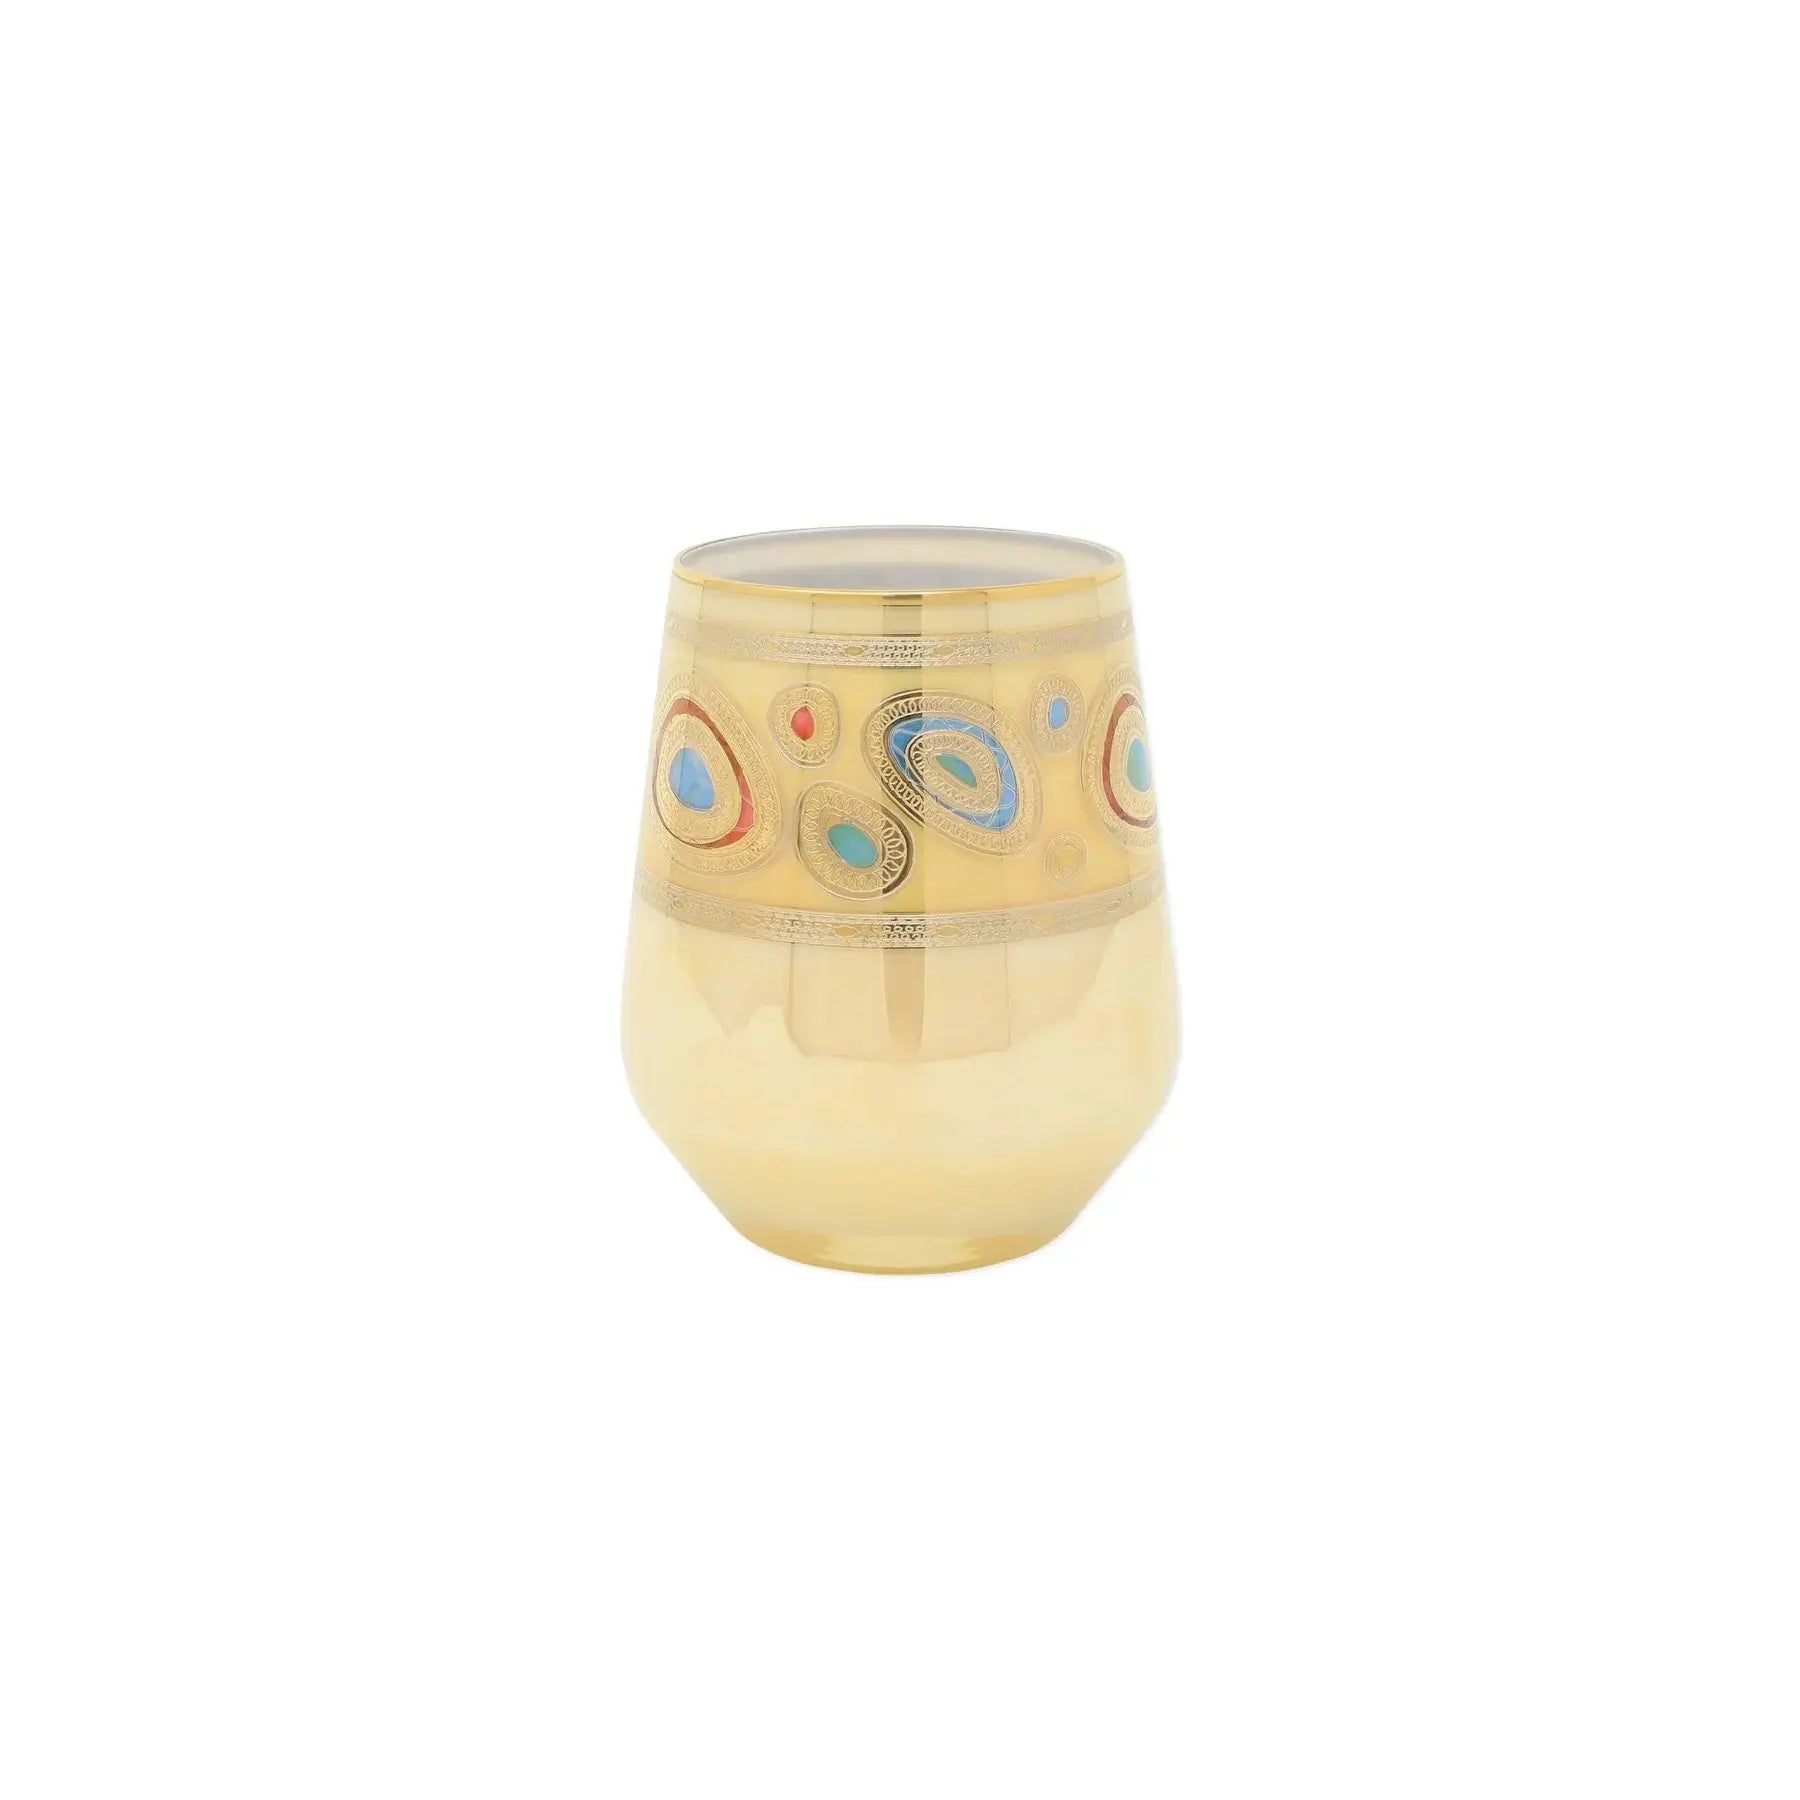 Vietri Regalia Stemless Wine Glass in Cream